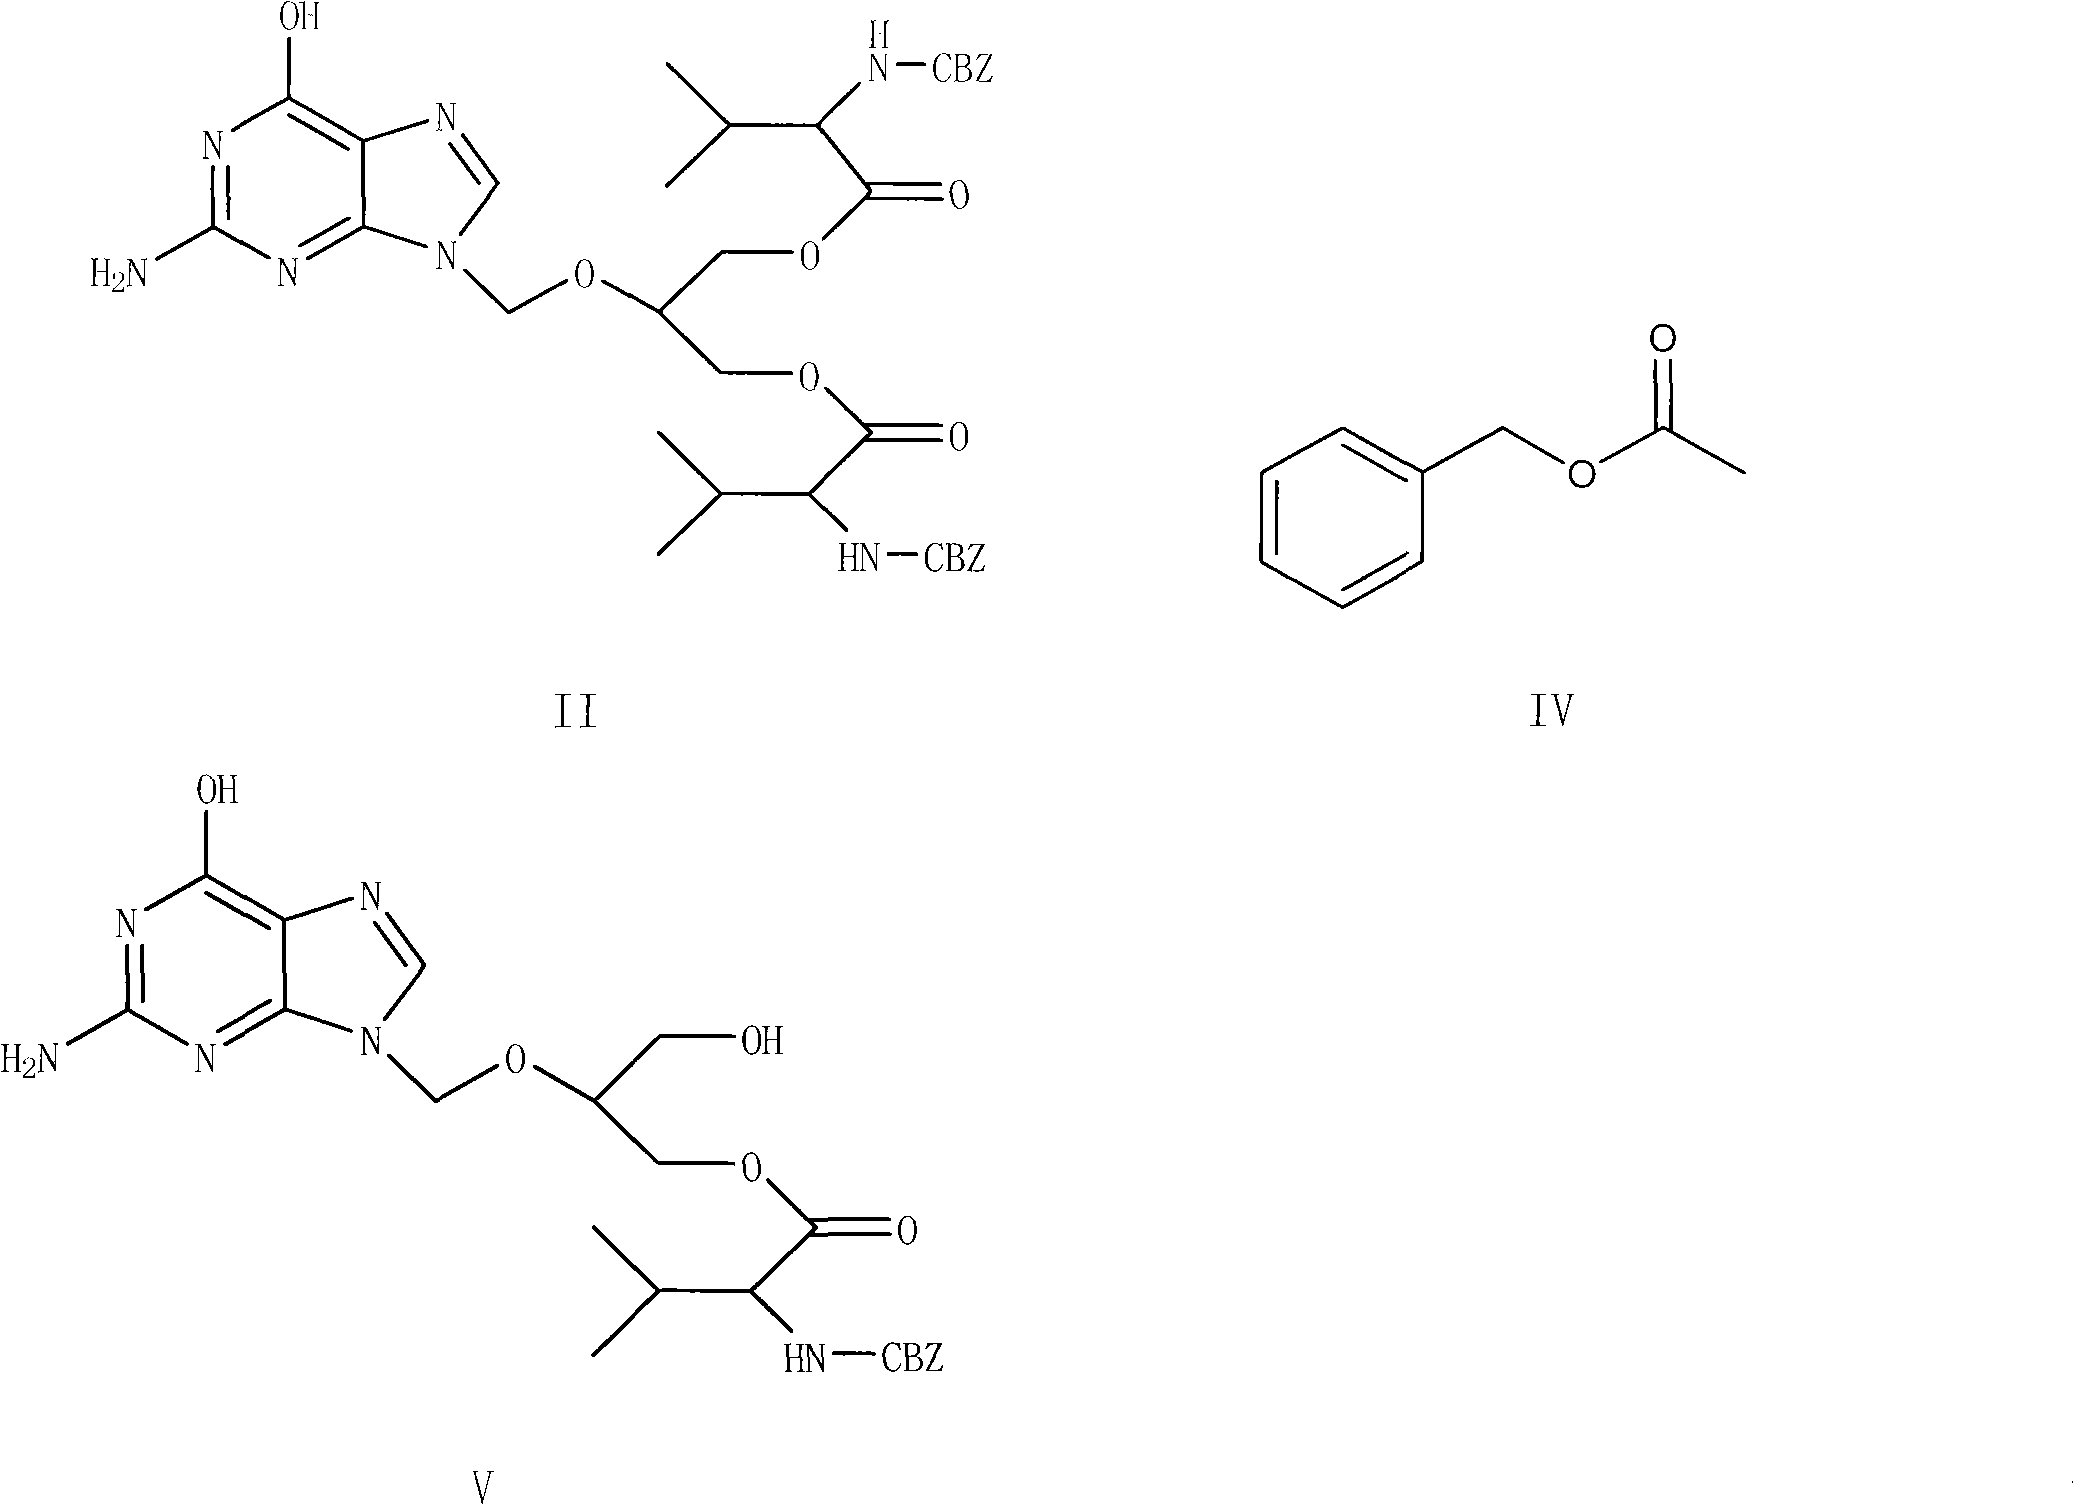 Preparation method for ganciclovir valine ester derivative